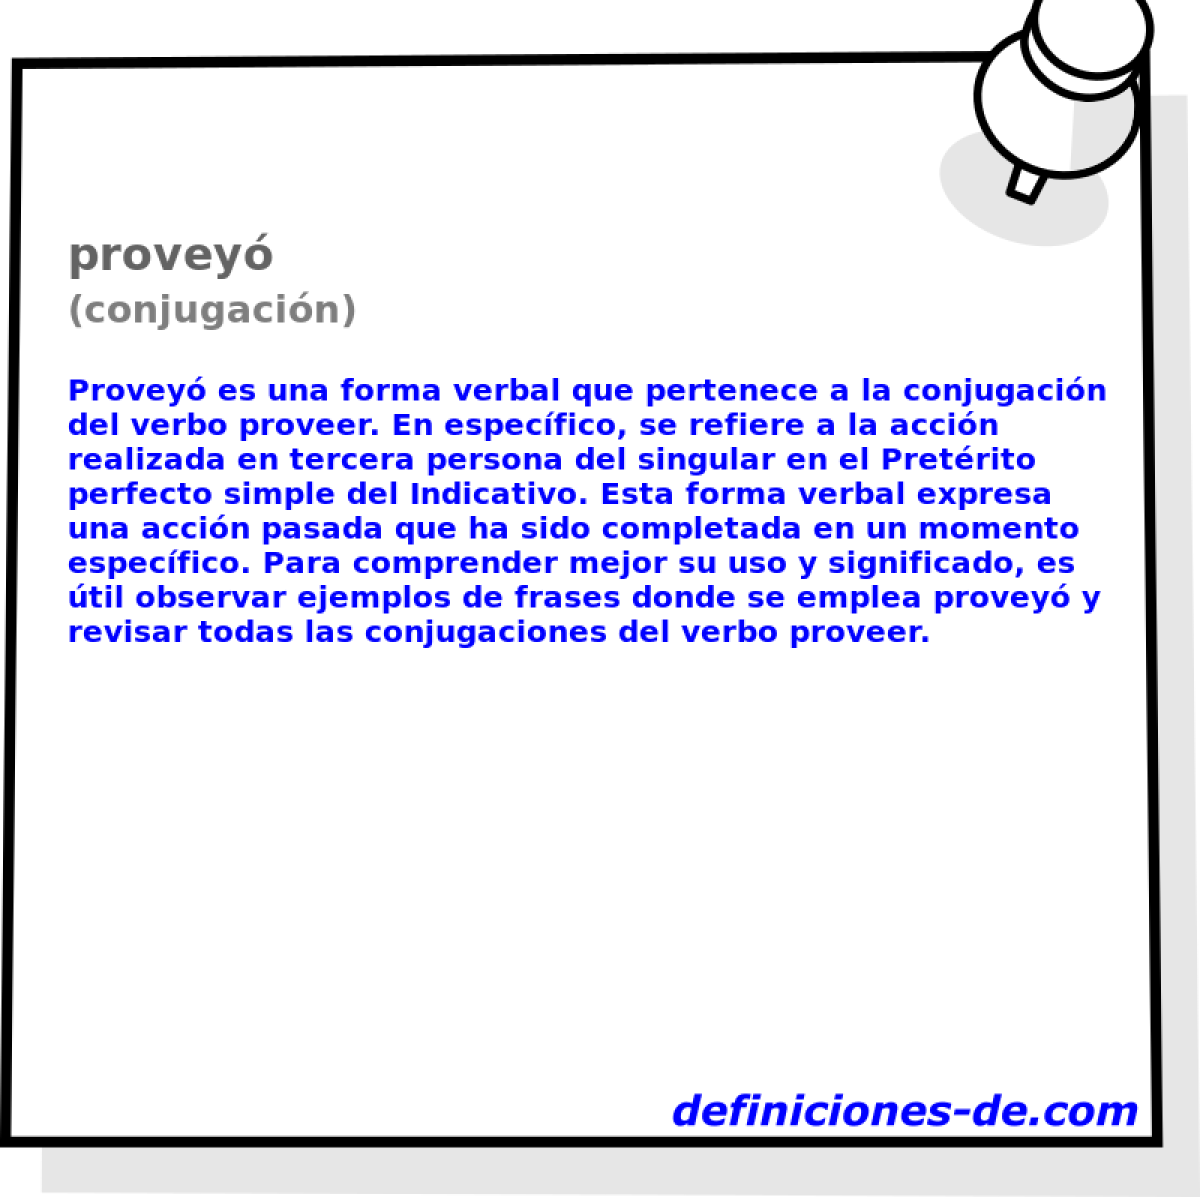 provey (conjugacin)